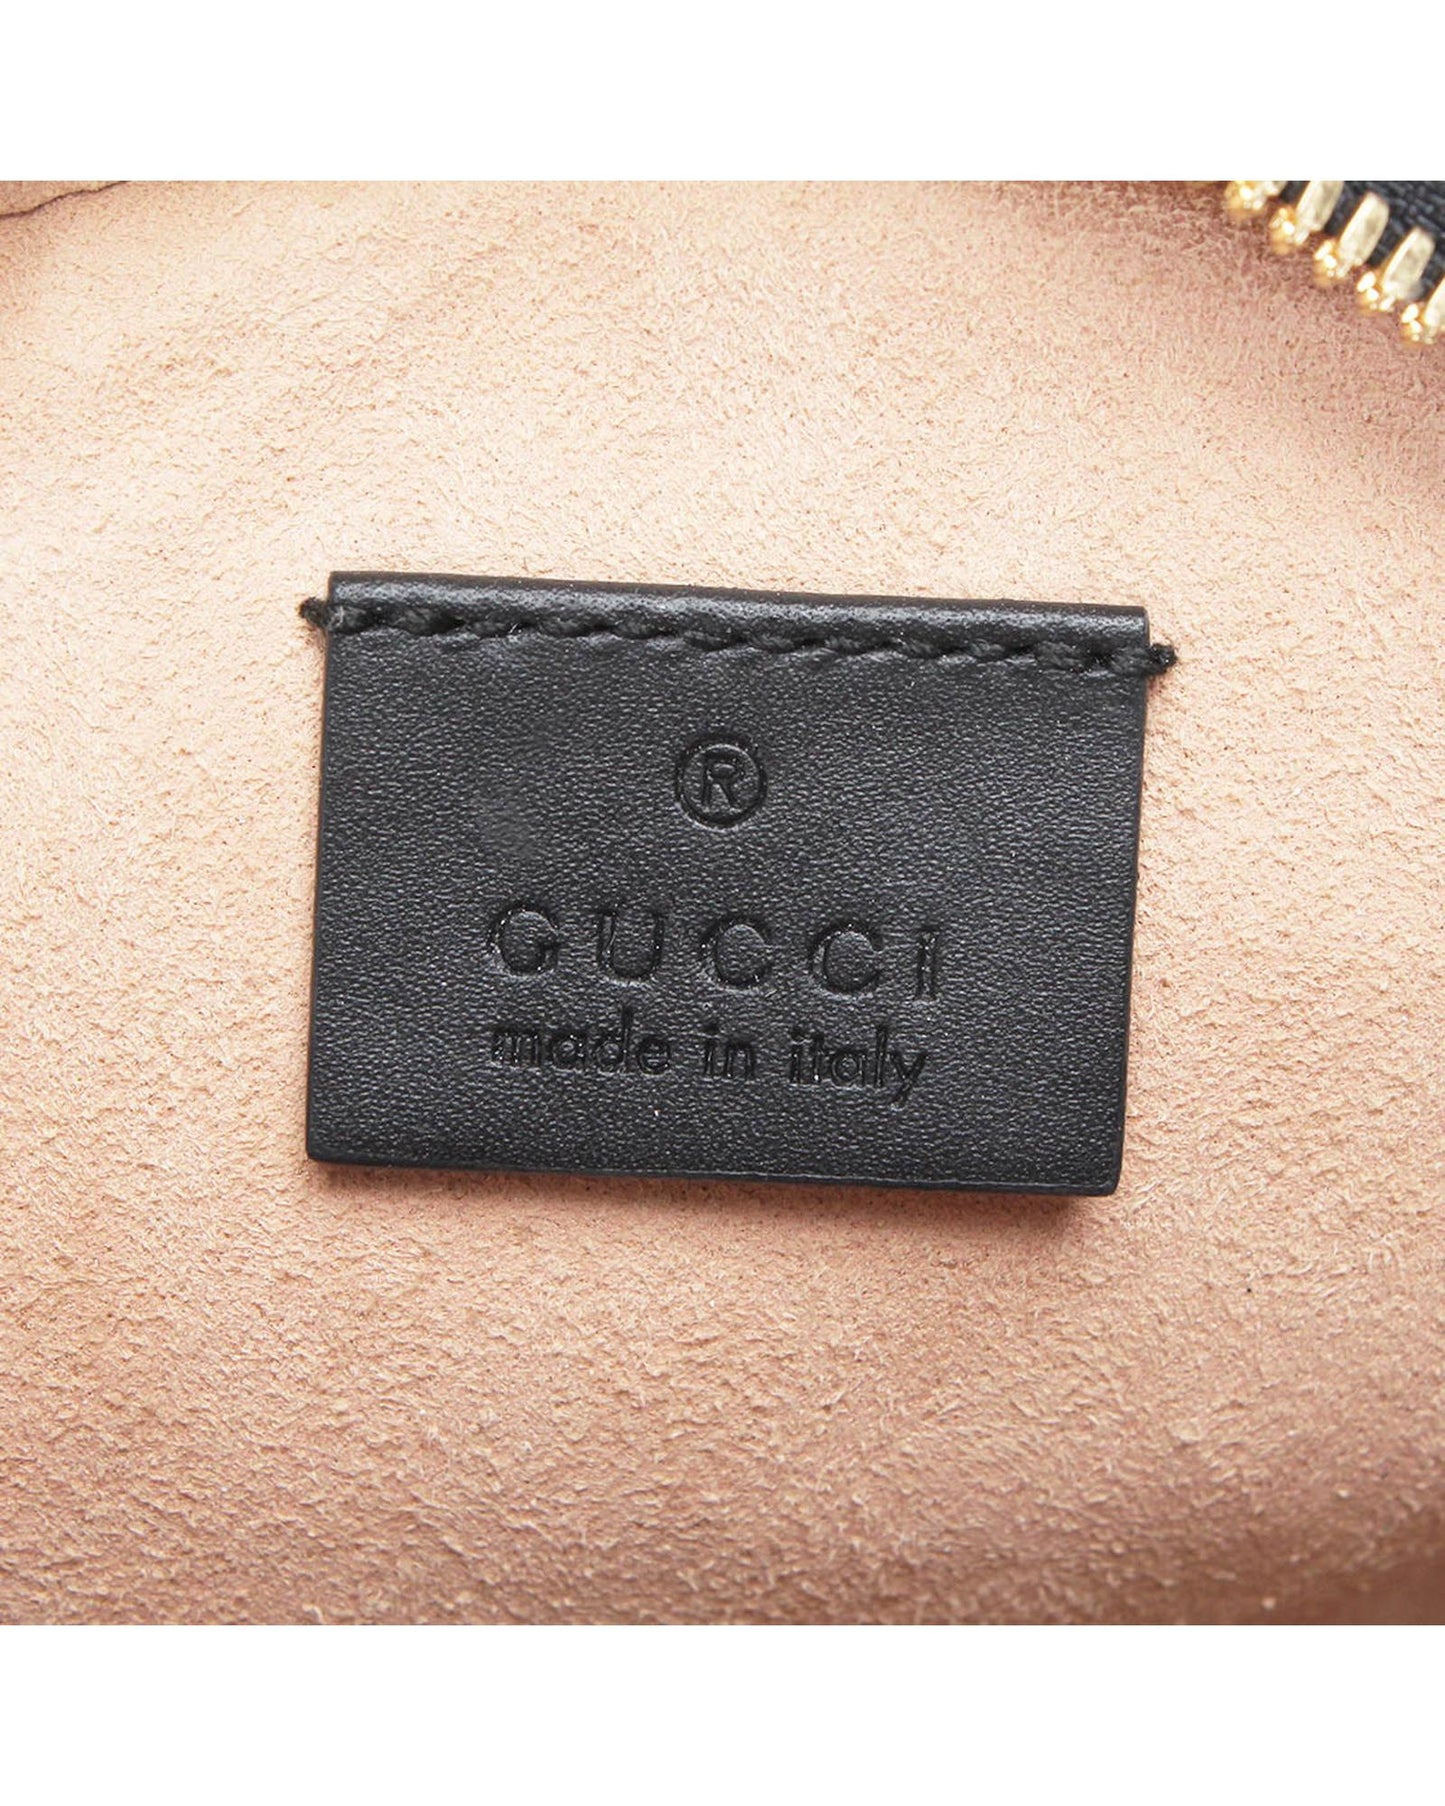 Gucci Women's Mini Black Suede Round Shoulder Bag in black